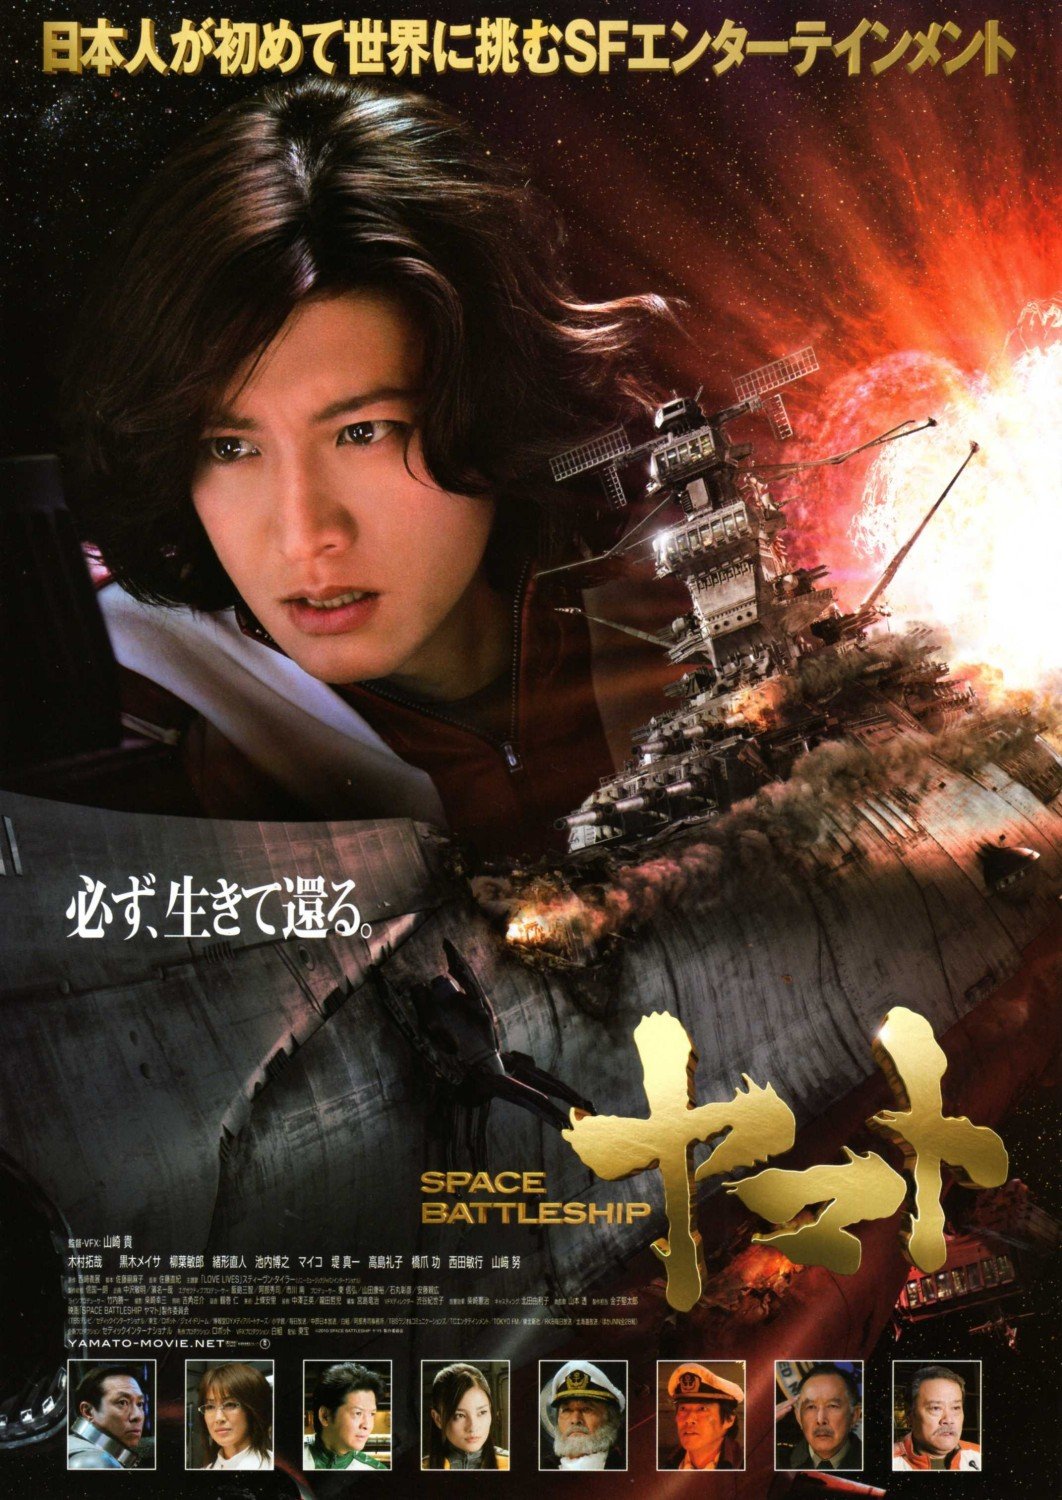 Extra Large Movie Poster Image for Space Battleship Yamato (#2 of 3)